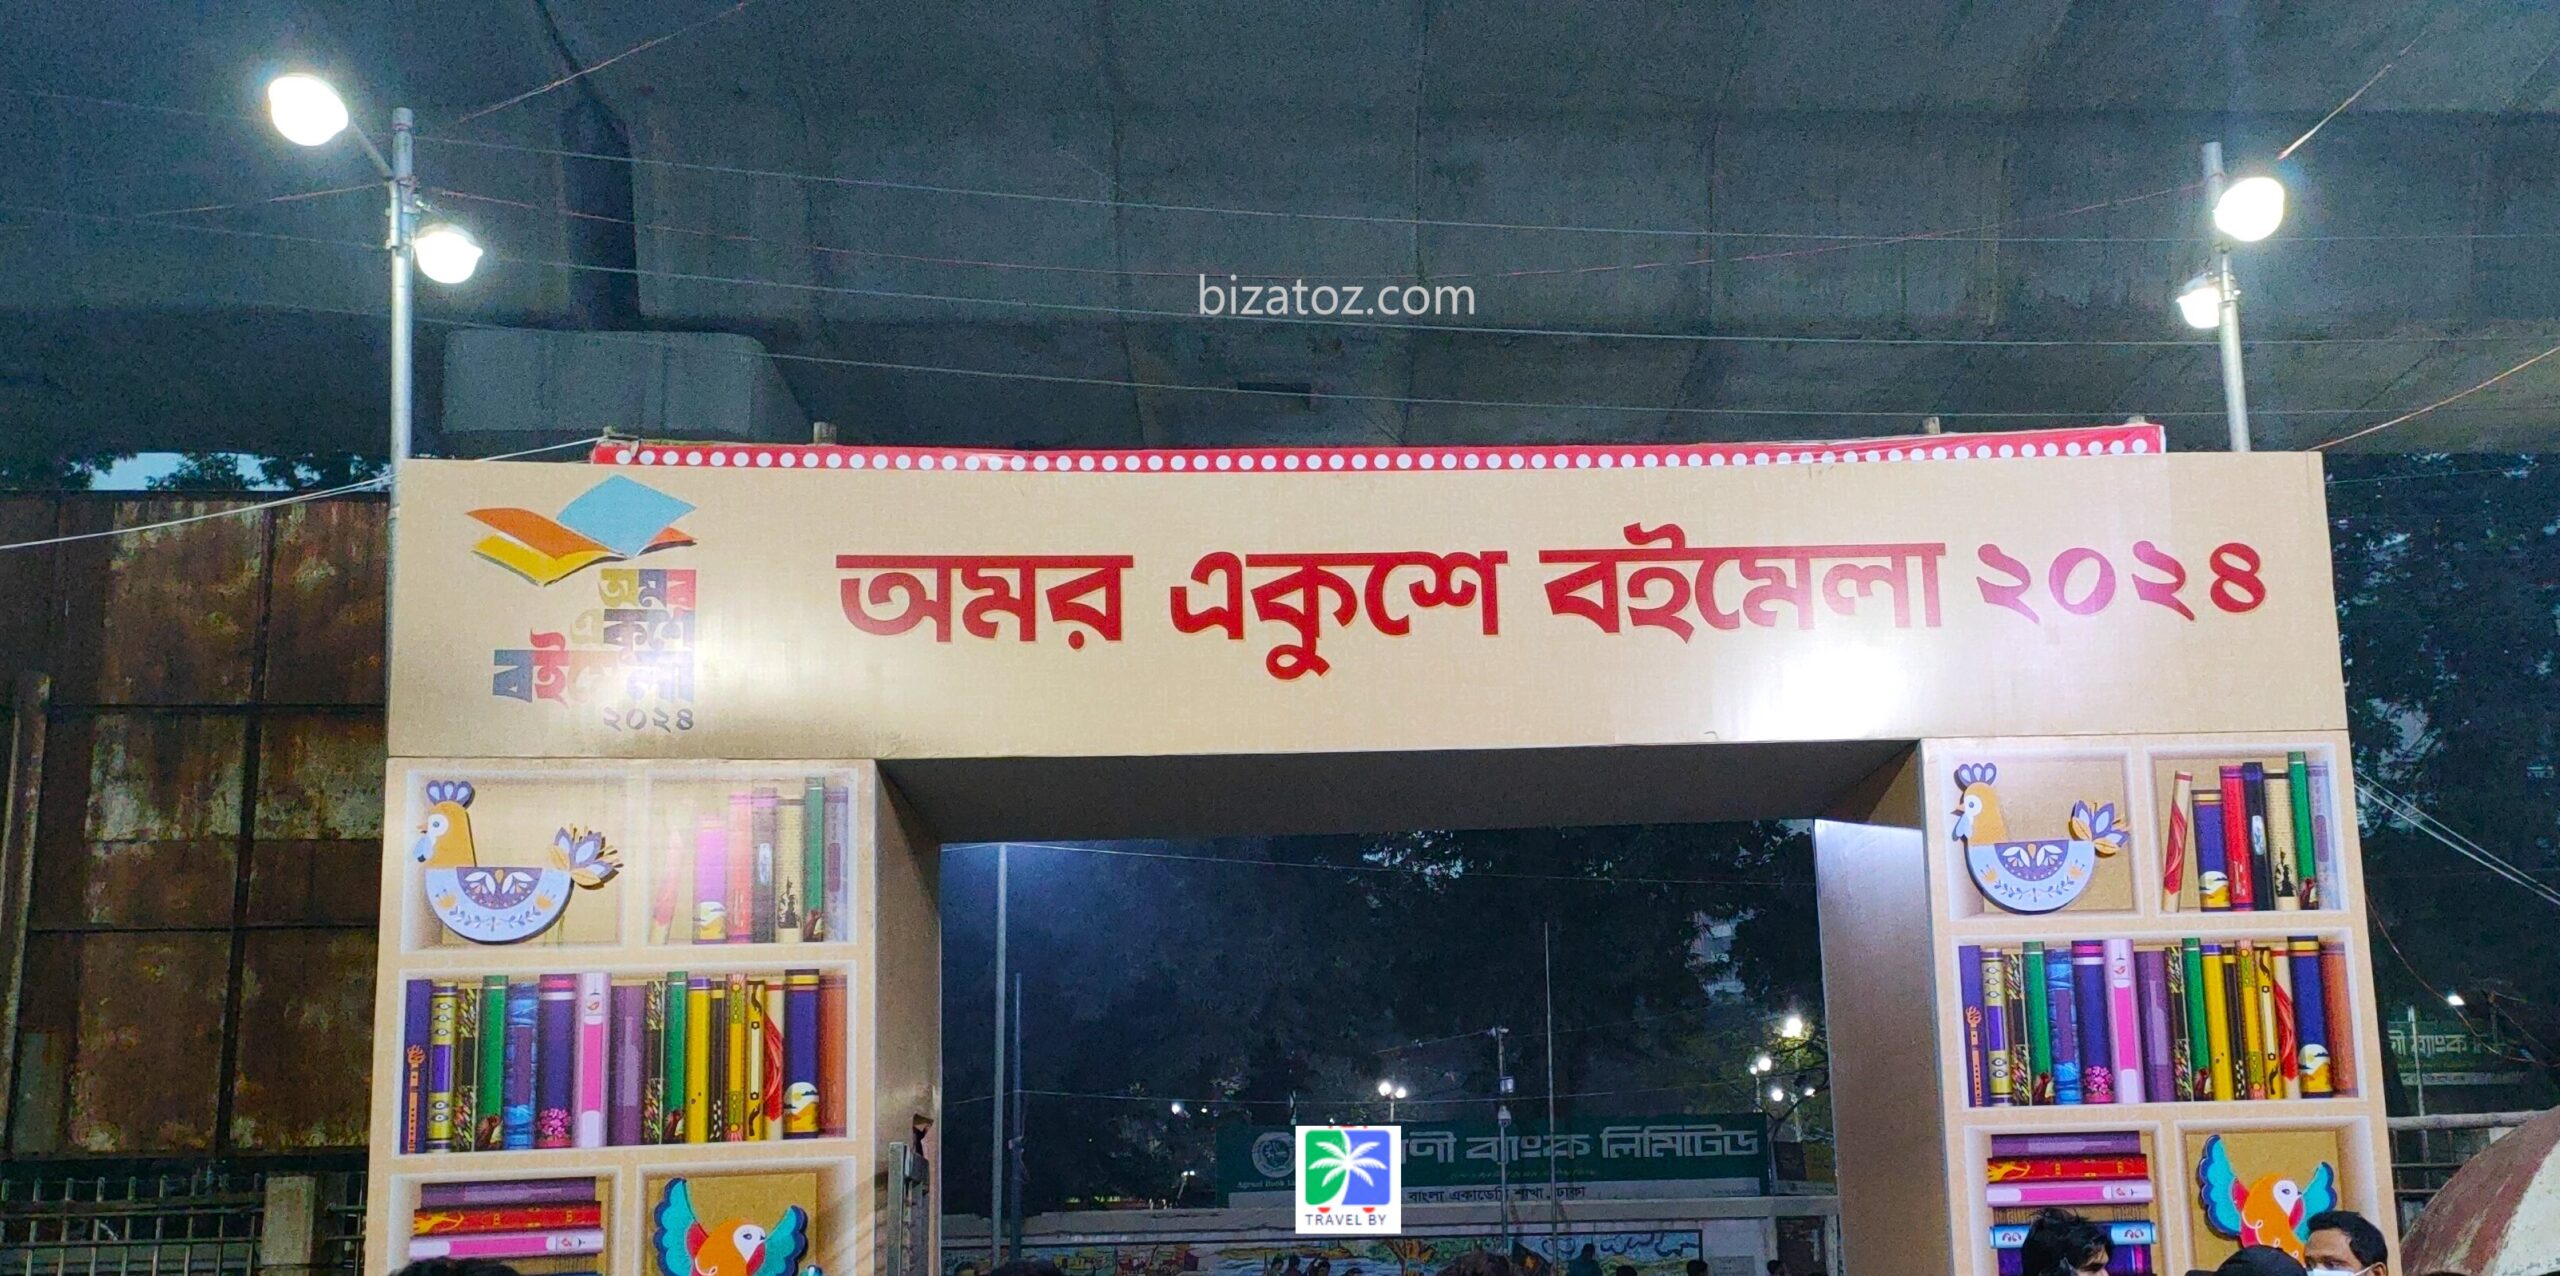 book_fair_bangladesh_bizatoz.com